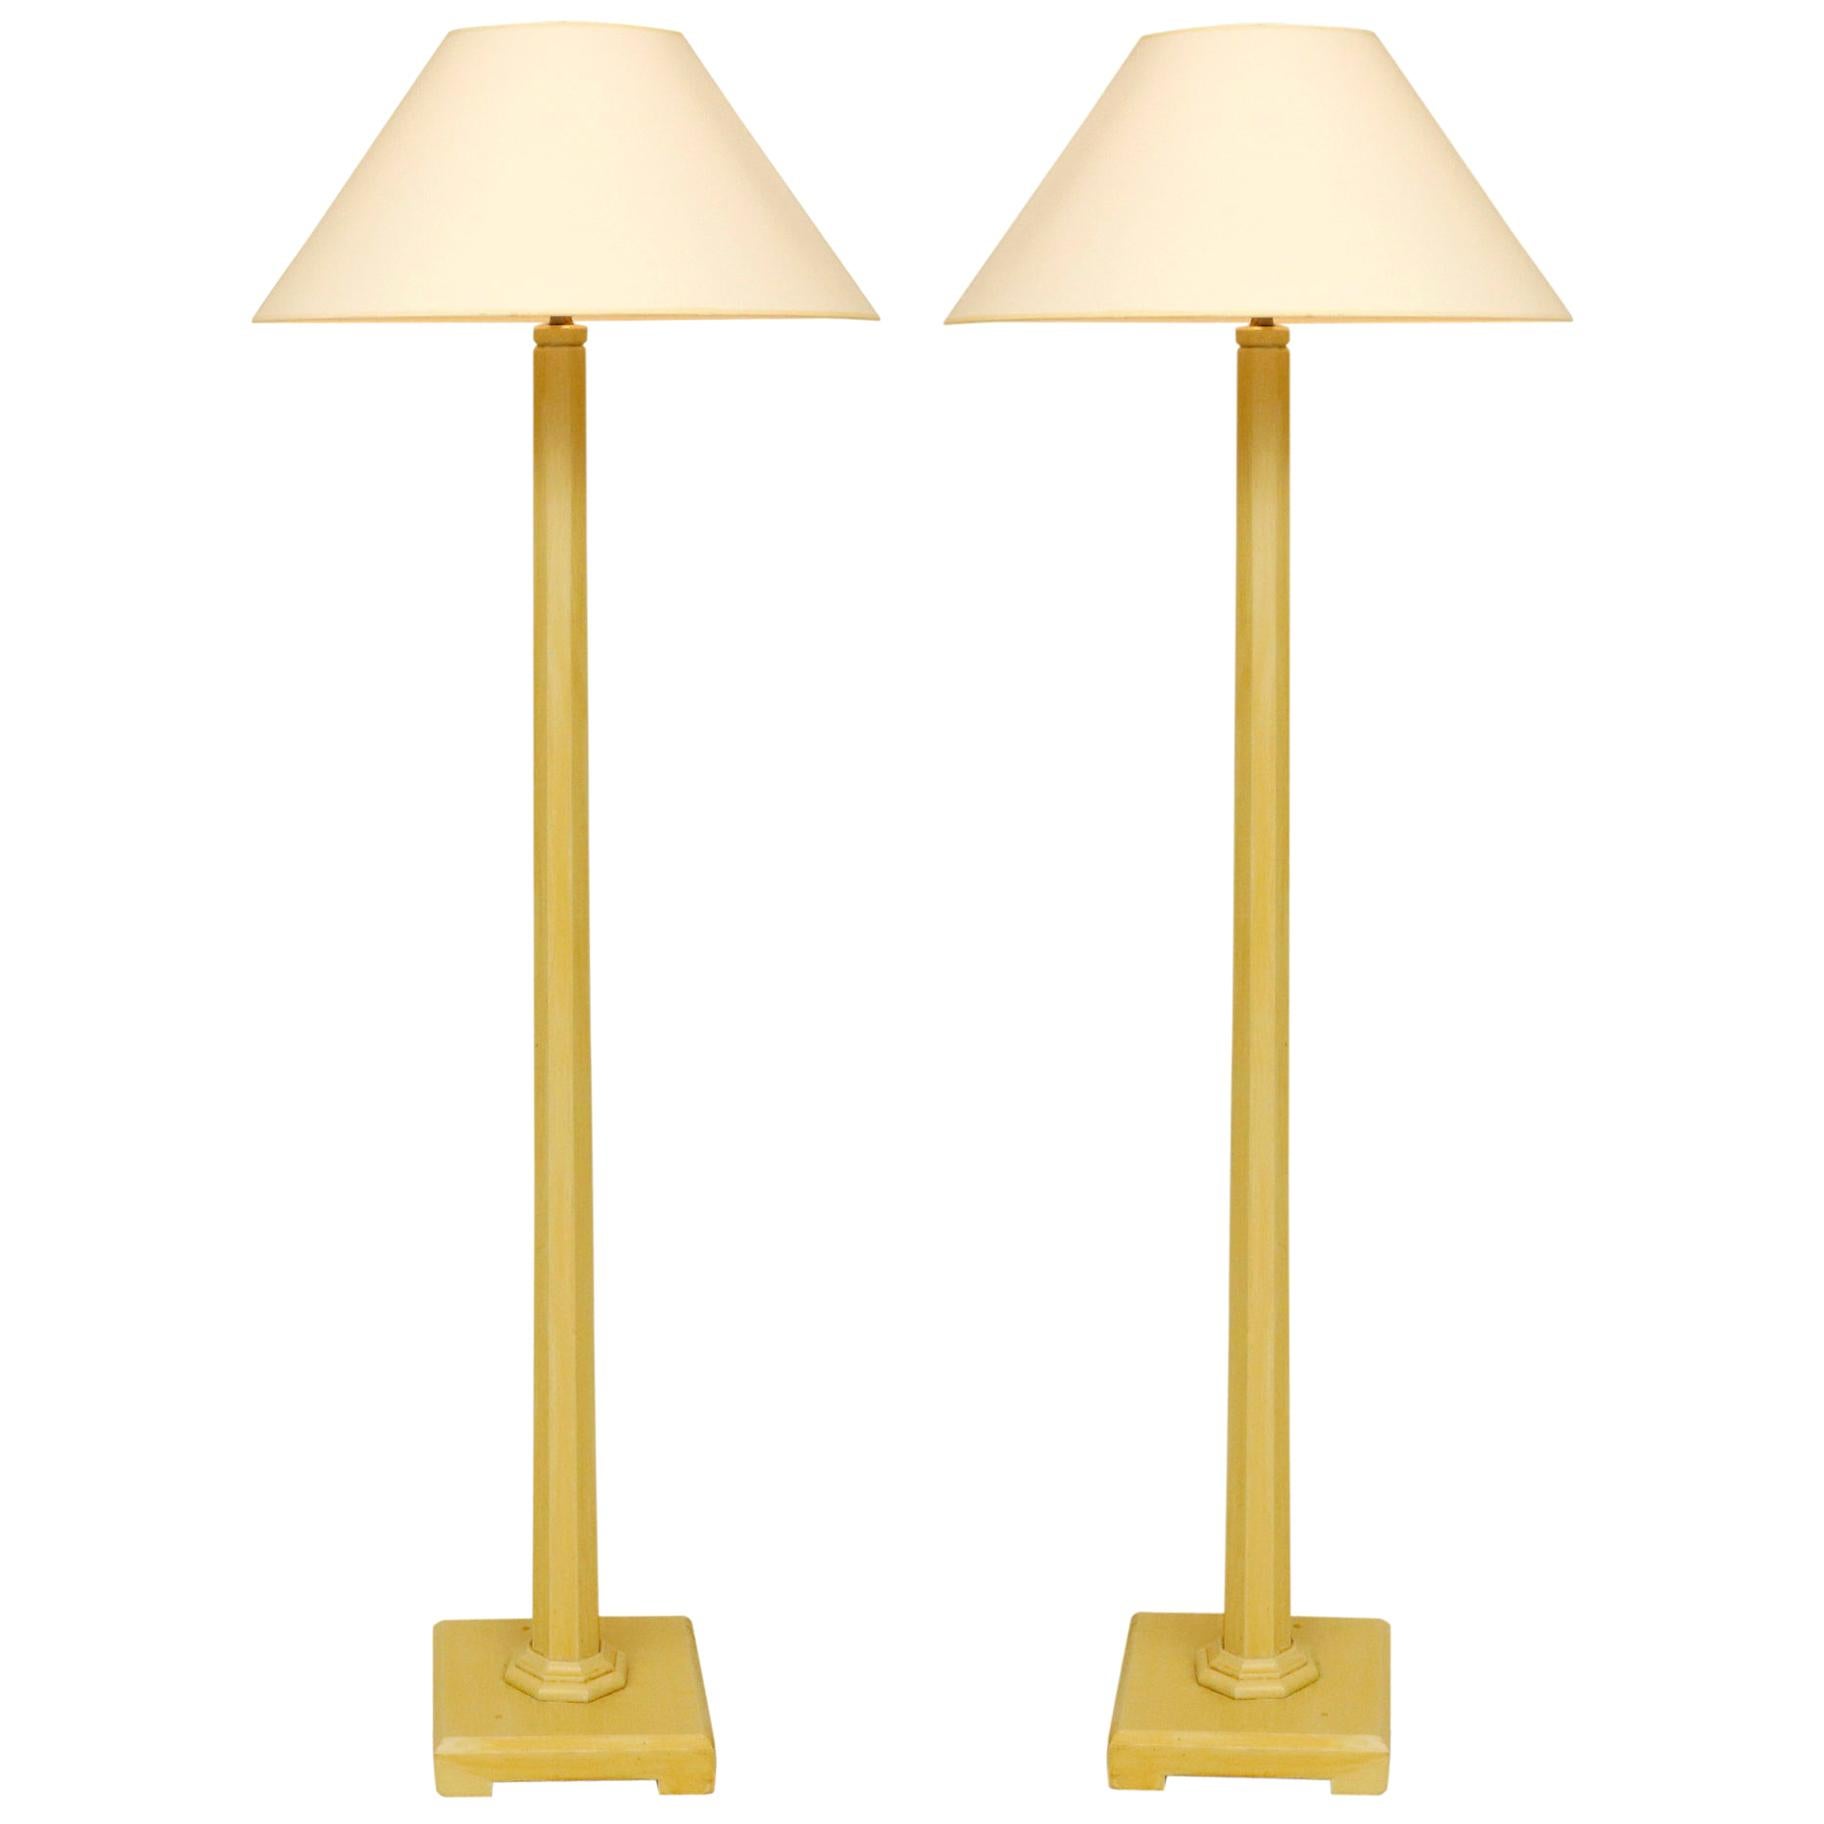 Pair of Wooden Floor Lamps For Sale